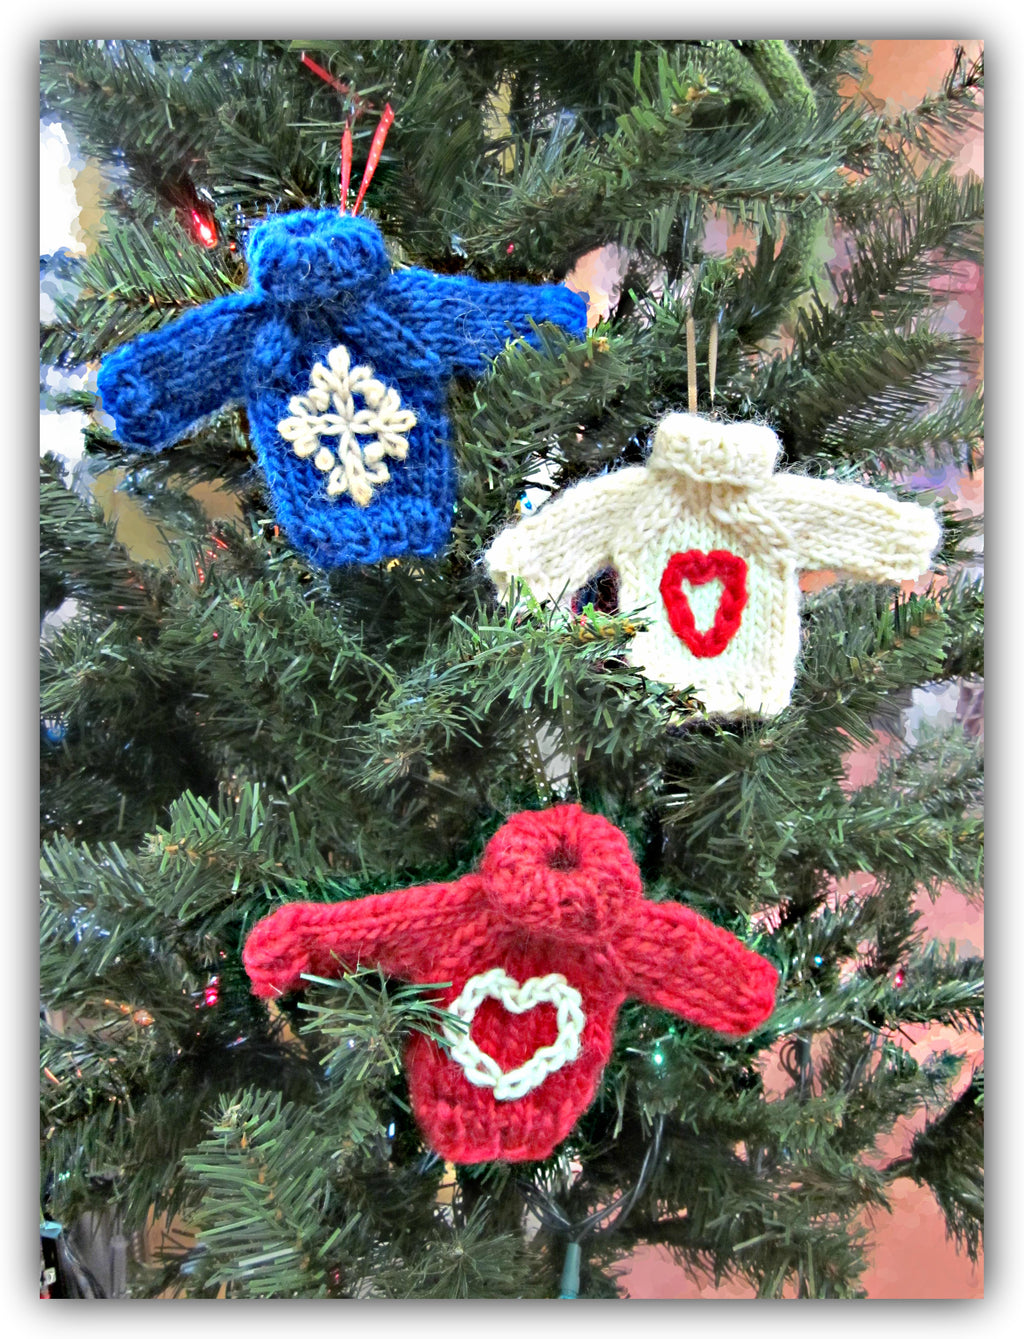 Christmas Sweater Ornaments - Designed by Stephanie Boozer